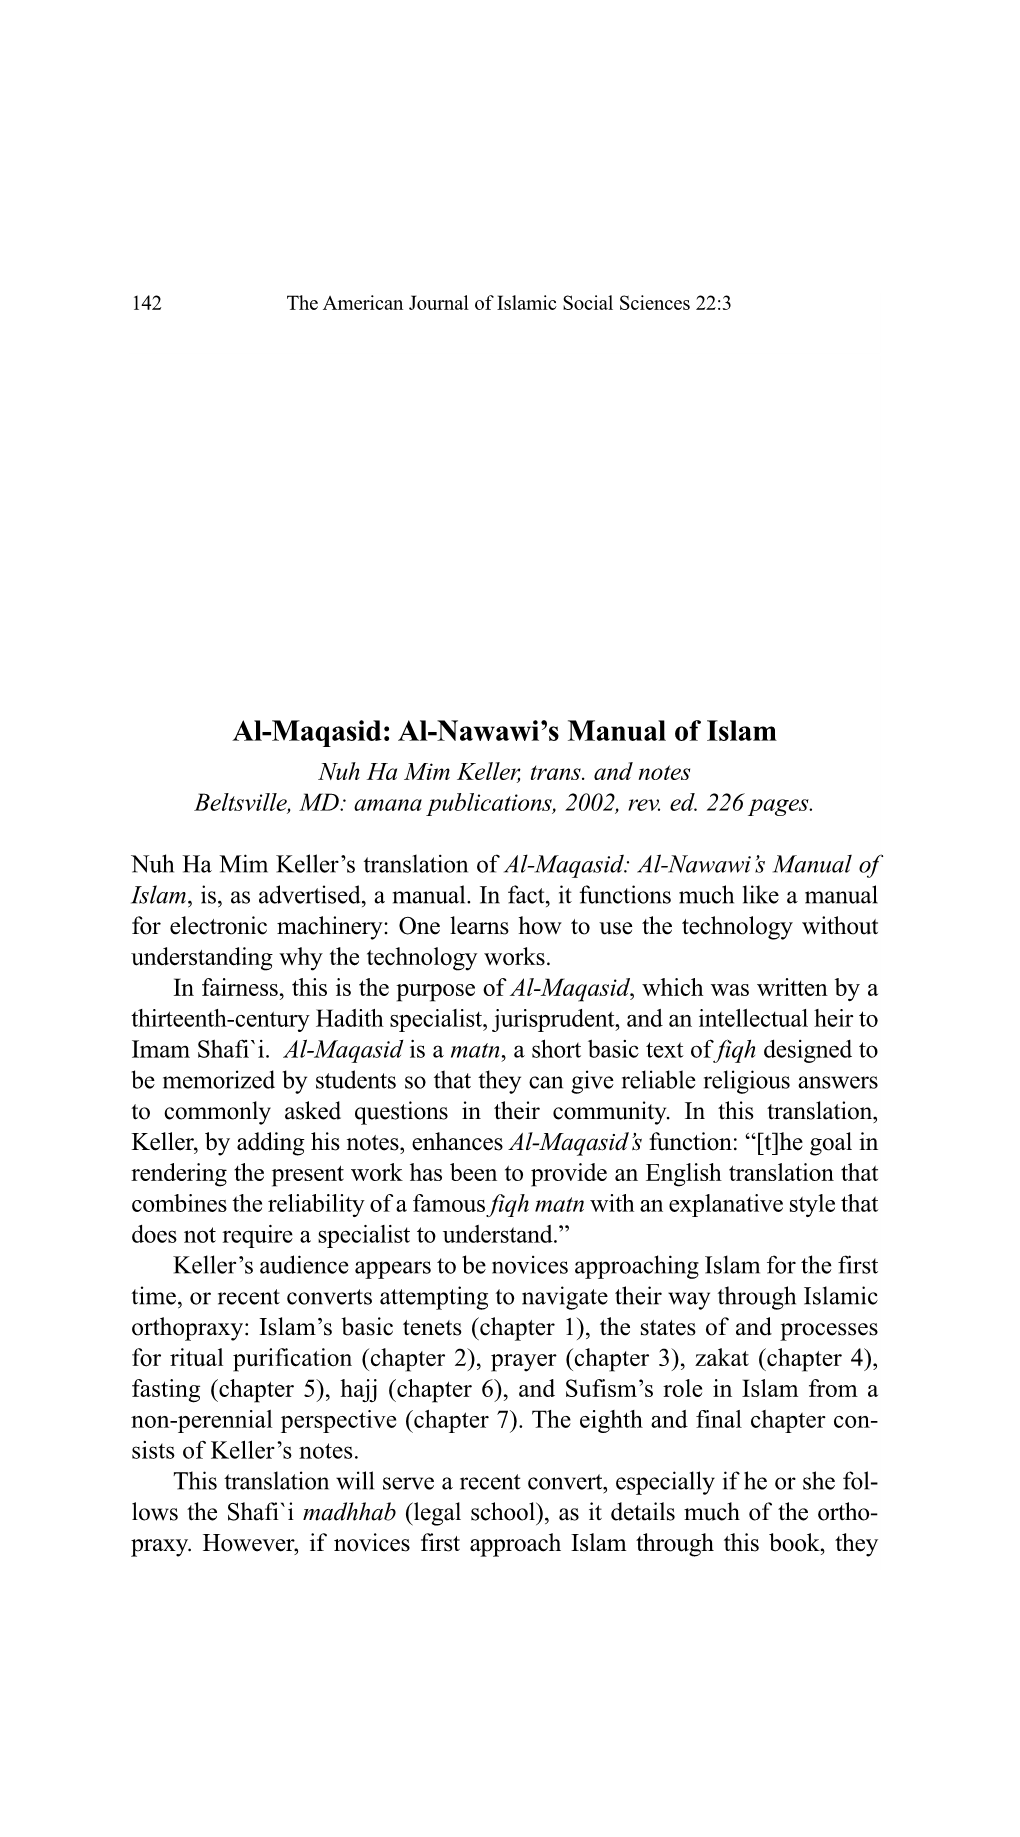 Al-Maqasid: Al-Nawawi's Manual of Islam